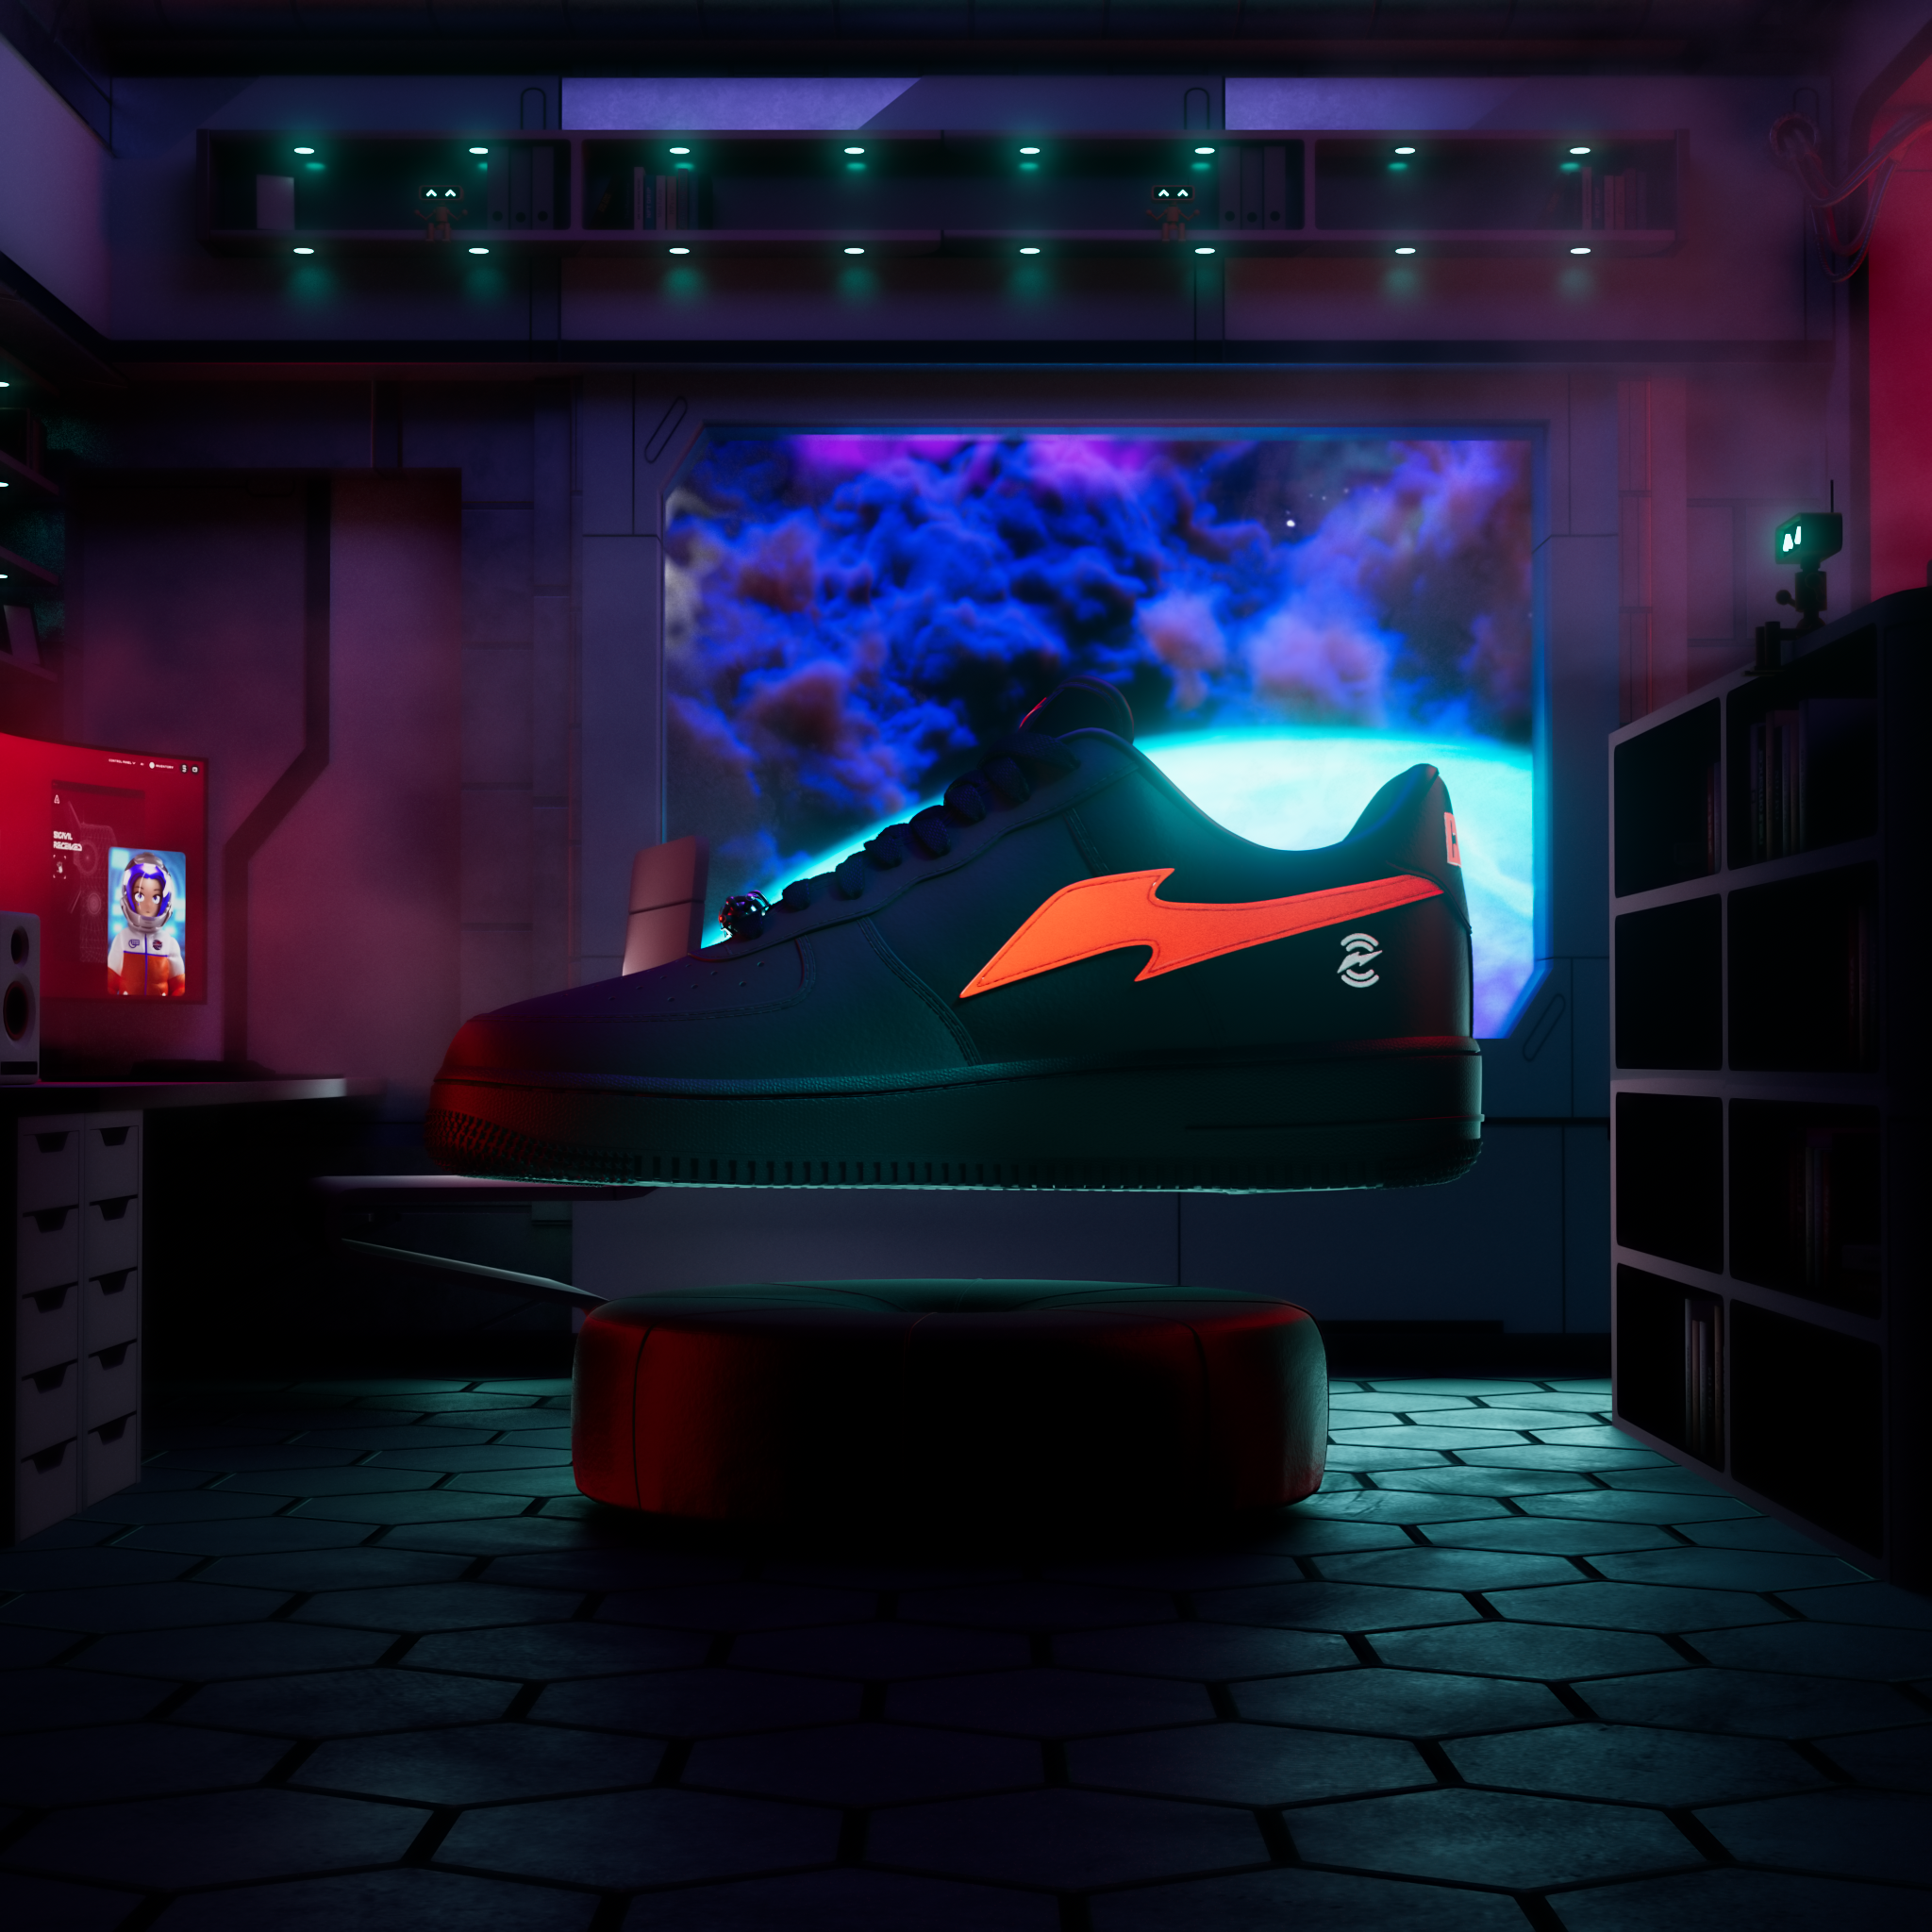 Takashi Murakami x RTFKT x Nike Air Force 1 Low Release Date